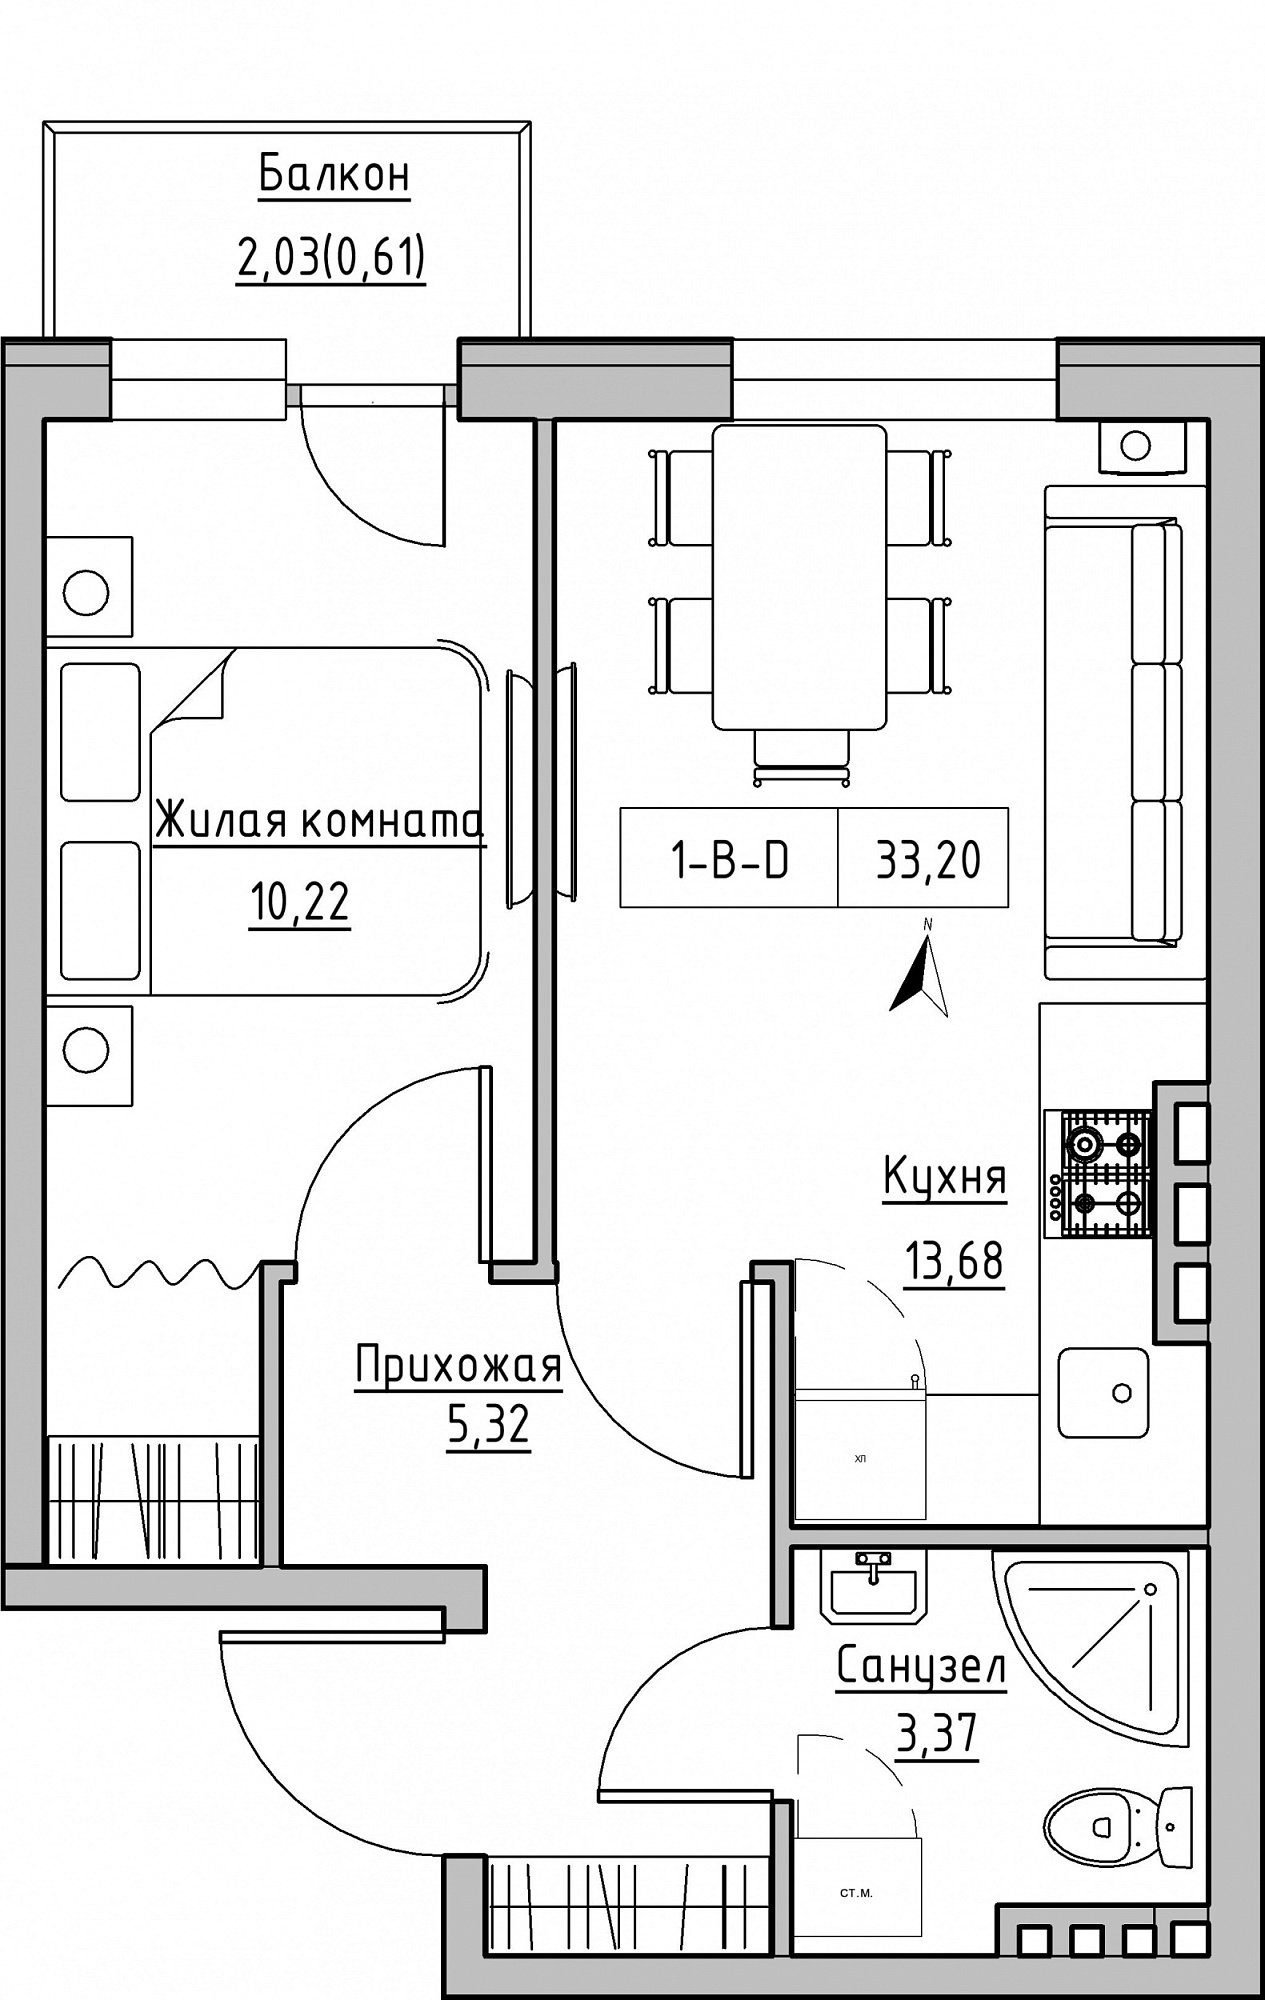 Planning 1-rm flats area 33.2m2, KS-024-05/0003.